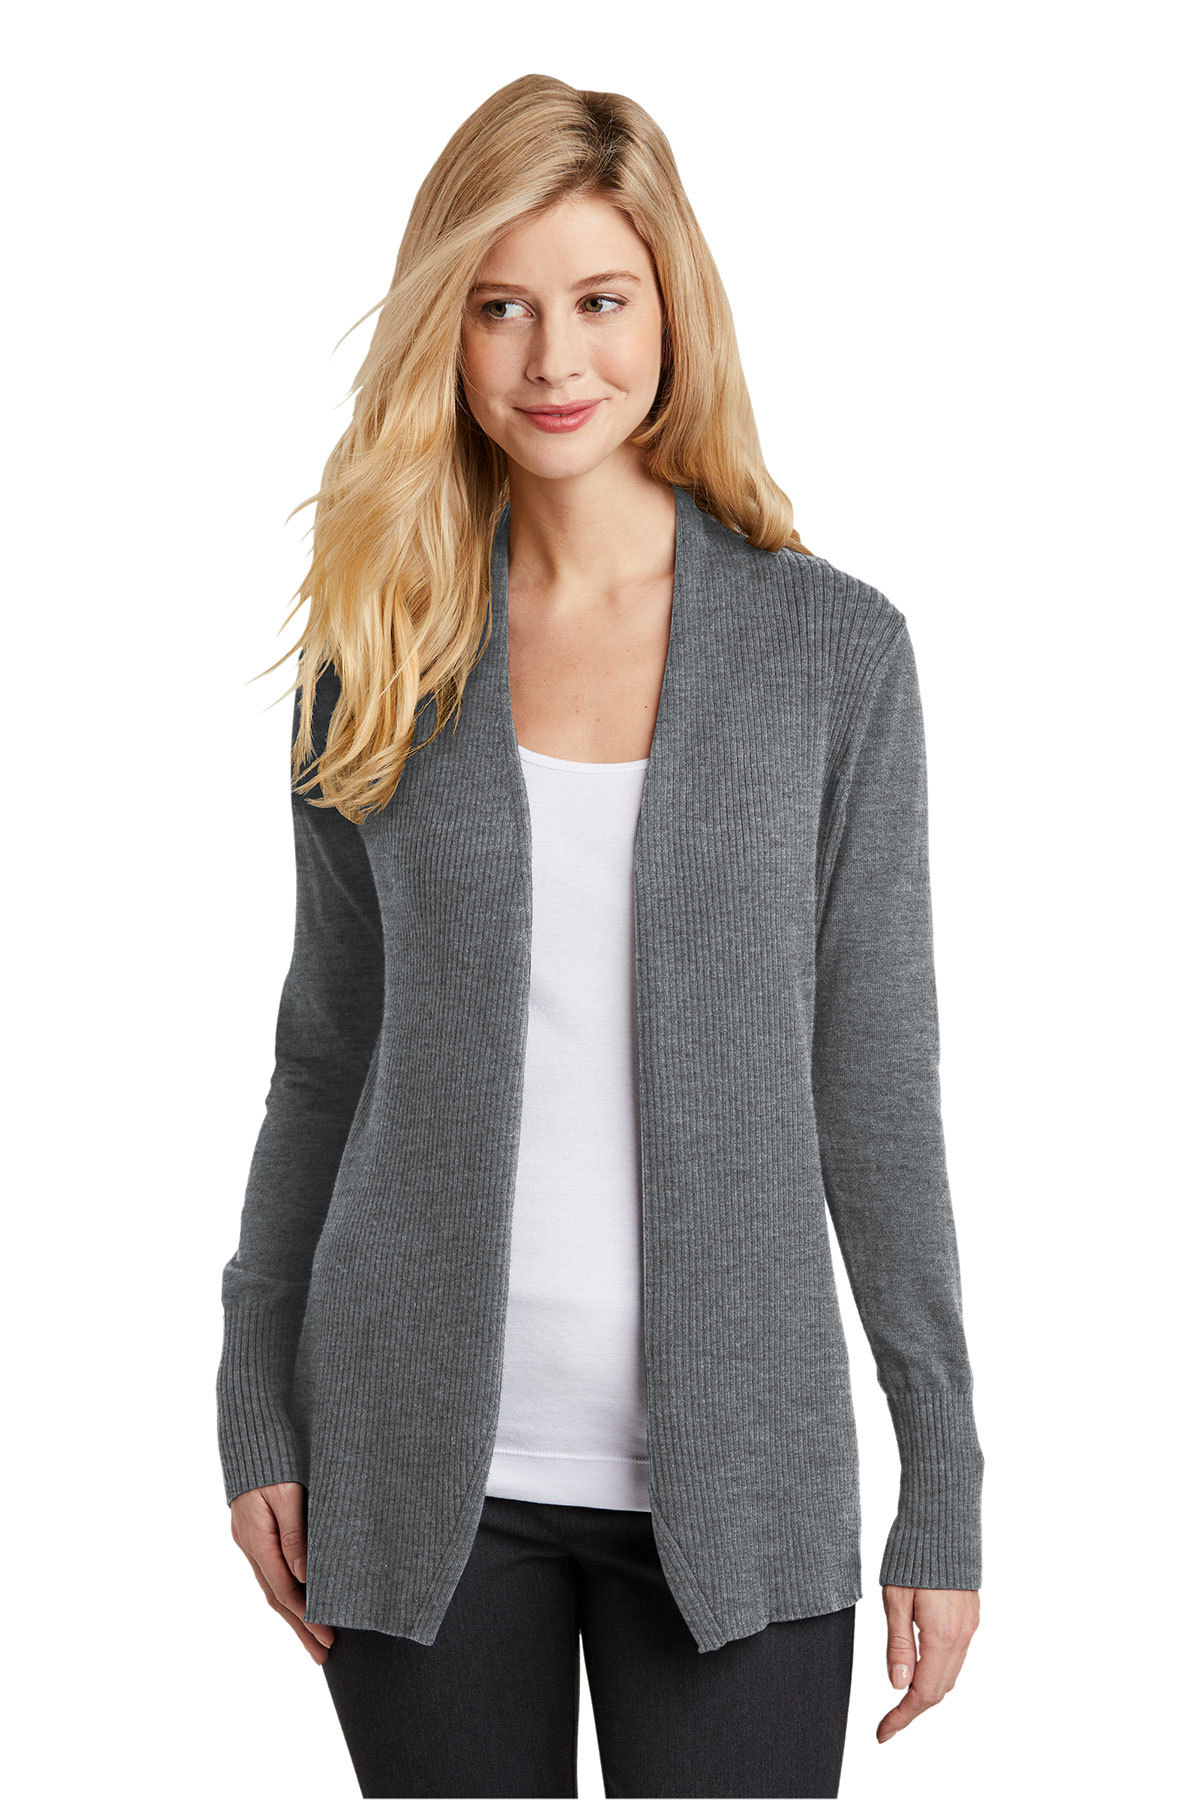 Touch Womens Baylor University Cardigan Sweater, Grey, Medium